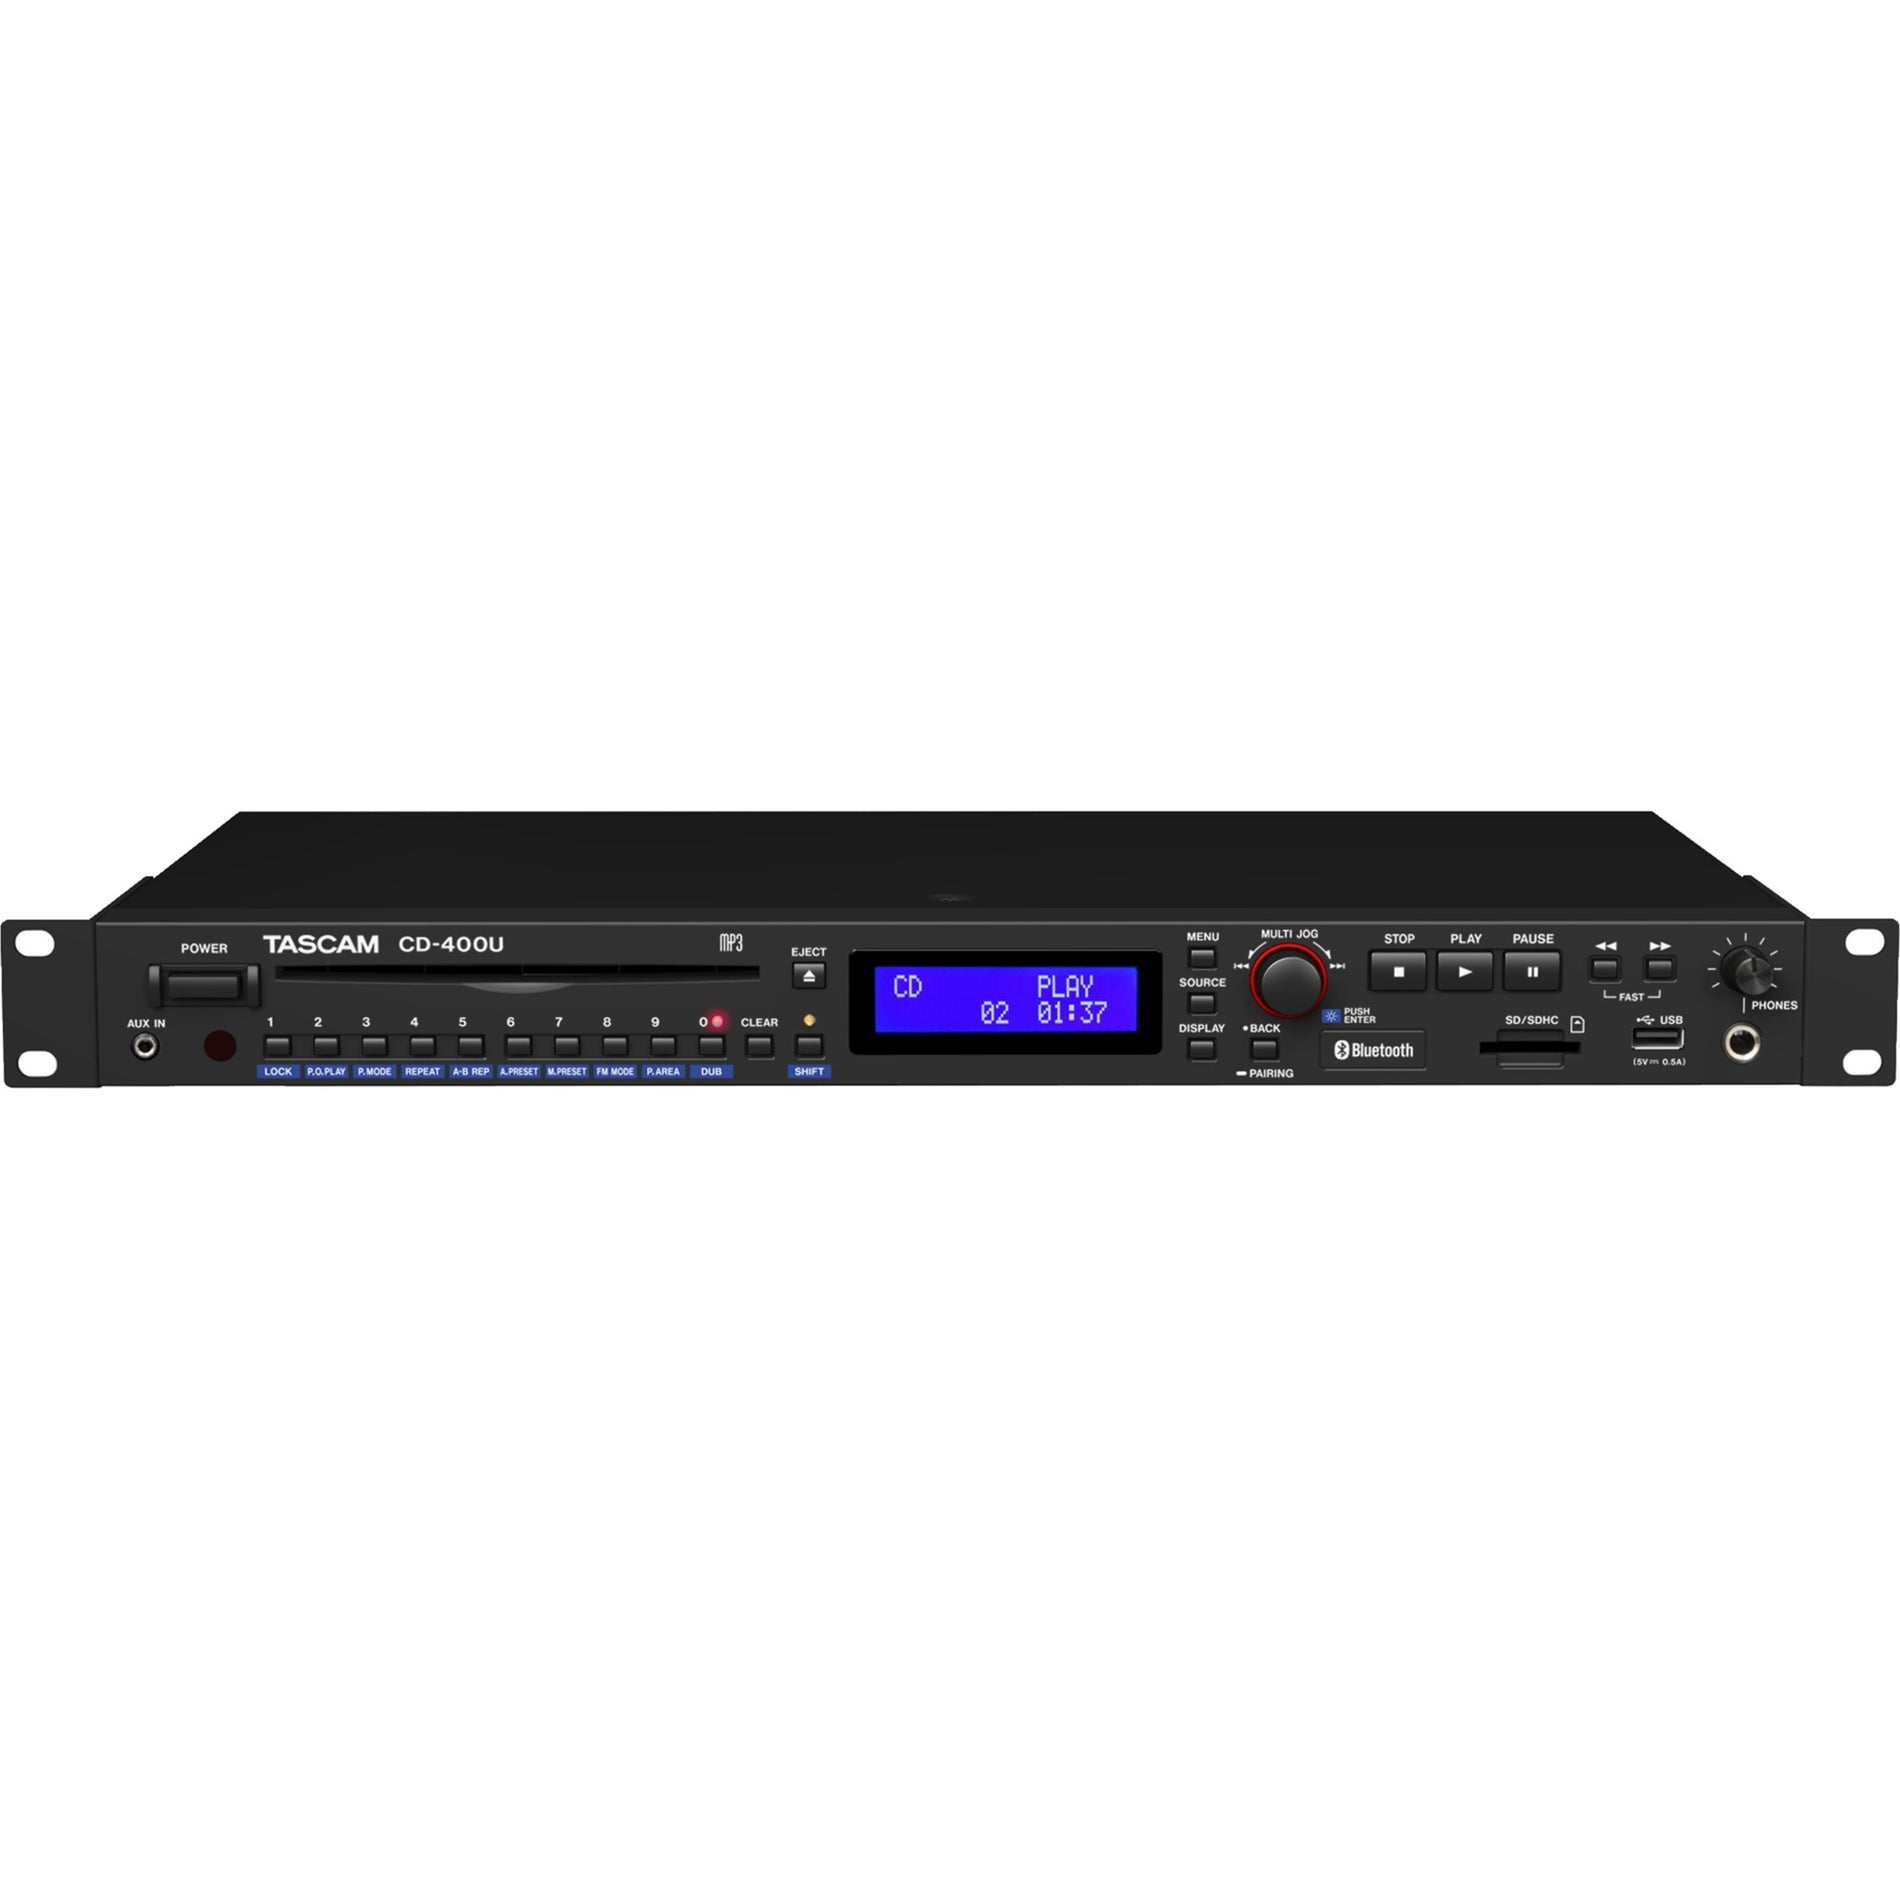 TASCAM CD-400U CD Player - Media Player - AM/FM Receiver, Rack-mountable, USB, SD, 1 Year Warranty